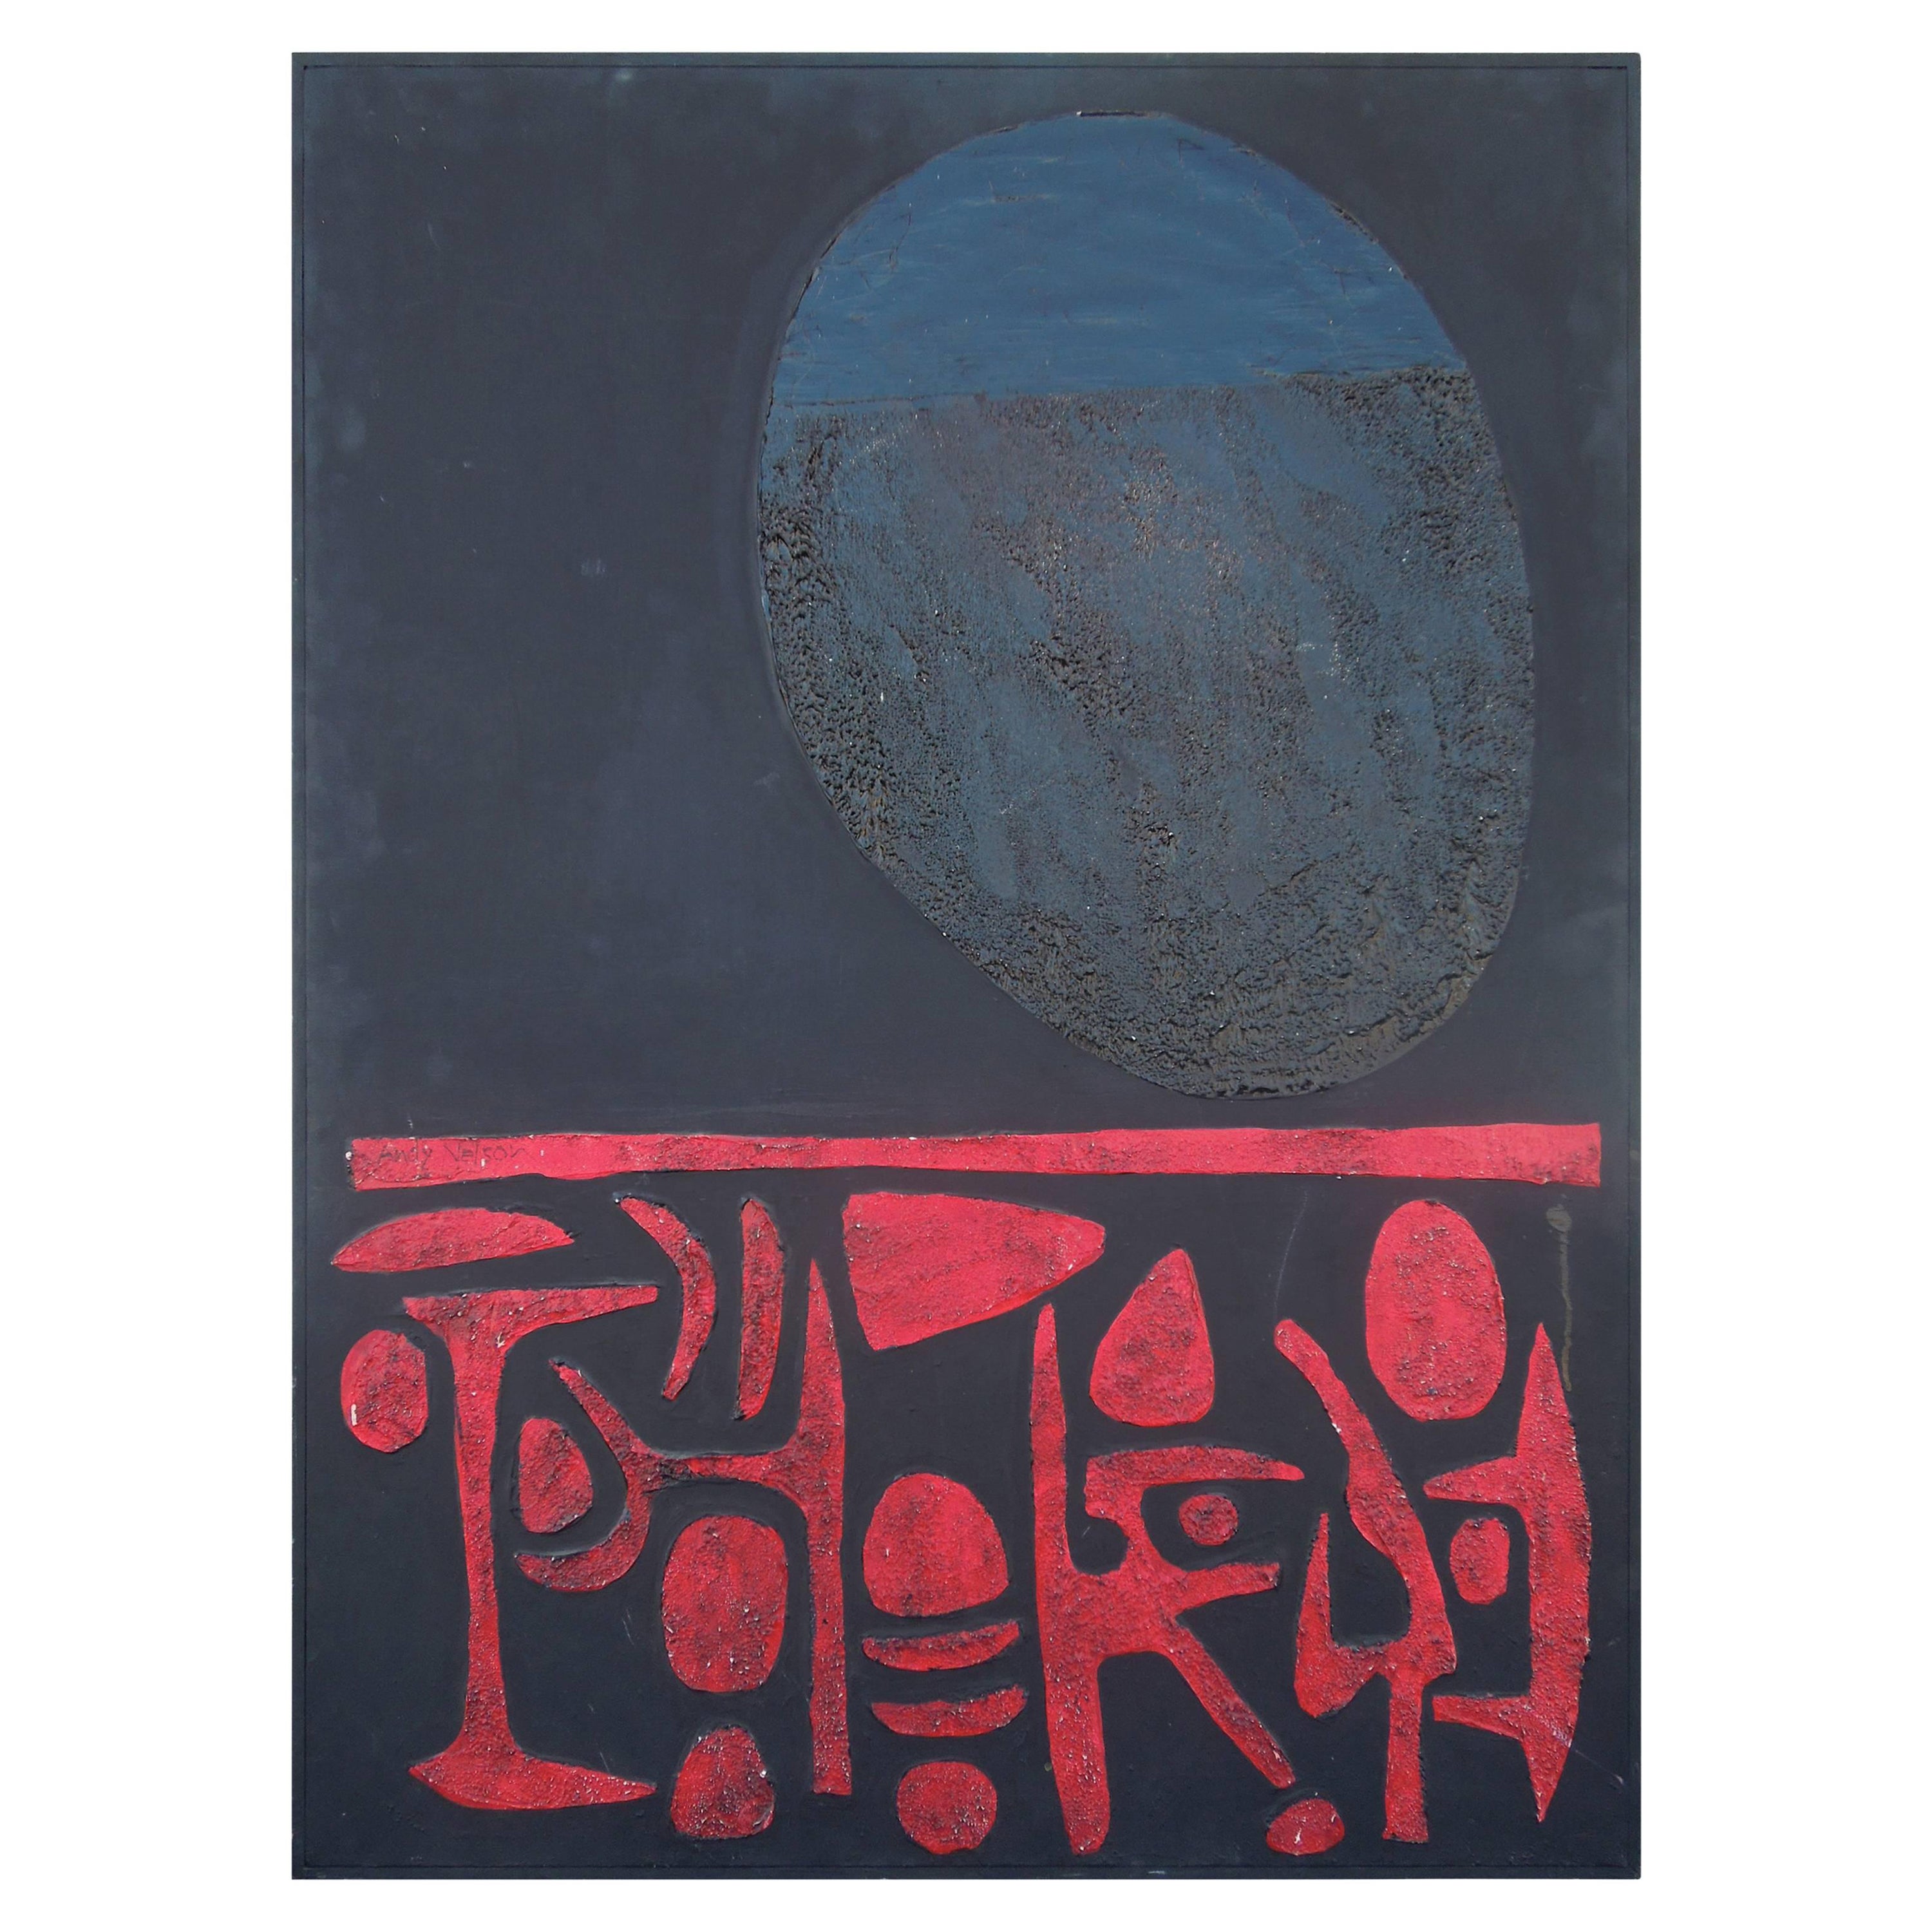 Andy Nelson Pintura original moderna "tribal" abstracta de los años 70 Beverly Hills 